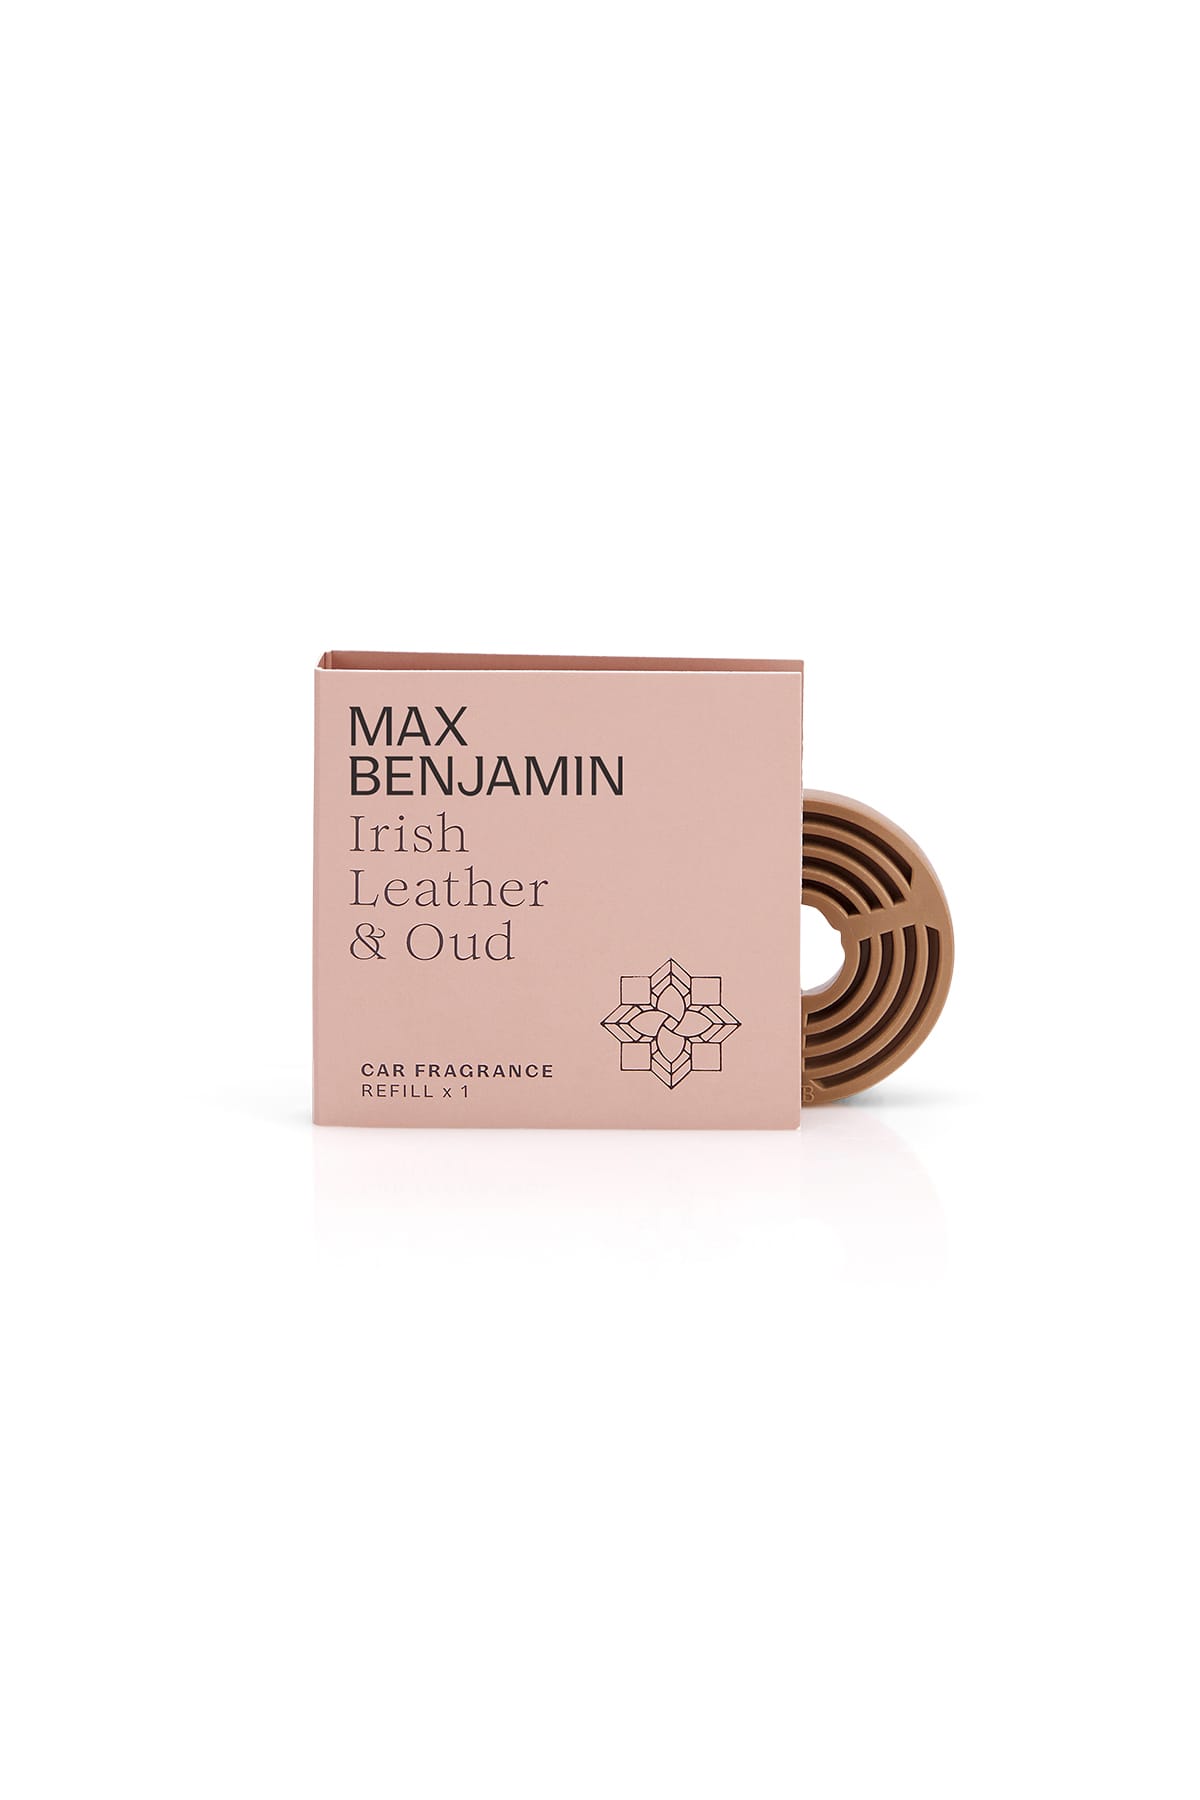 Autoduft Car Fragrance Refill Irish Leather & Oud Duftkarten Max Benjamin 